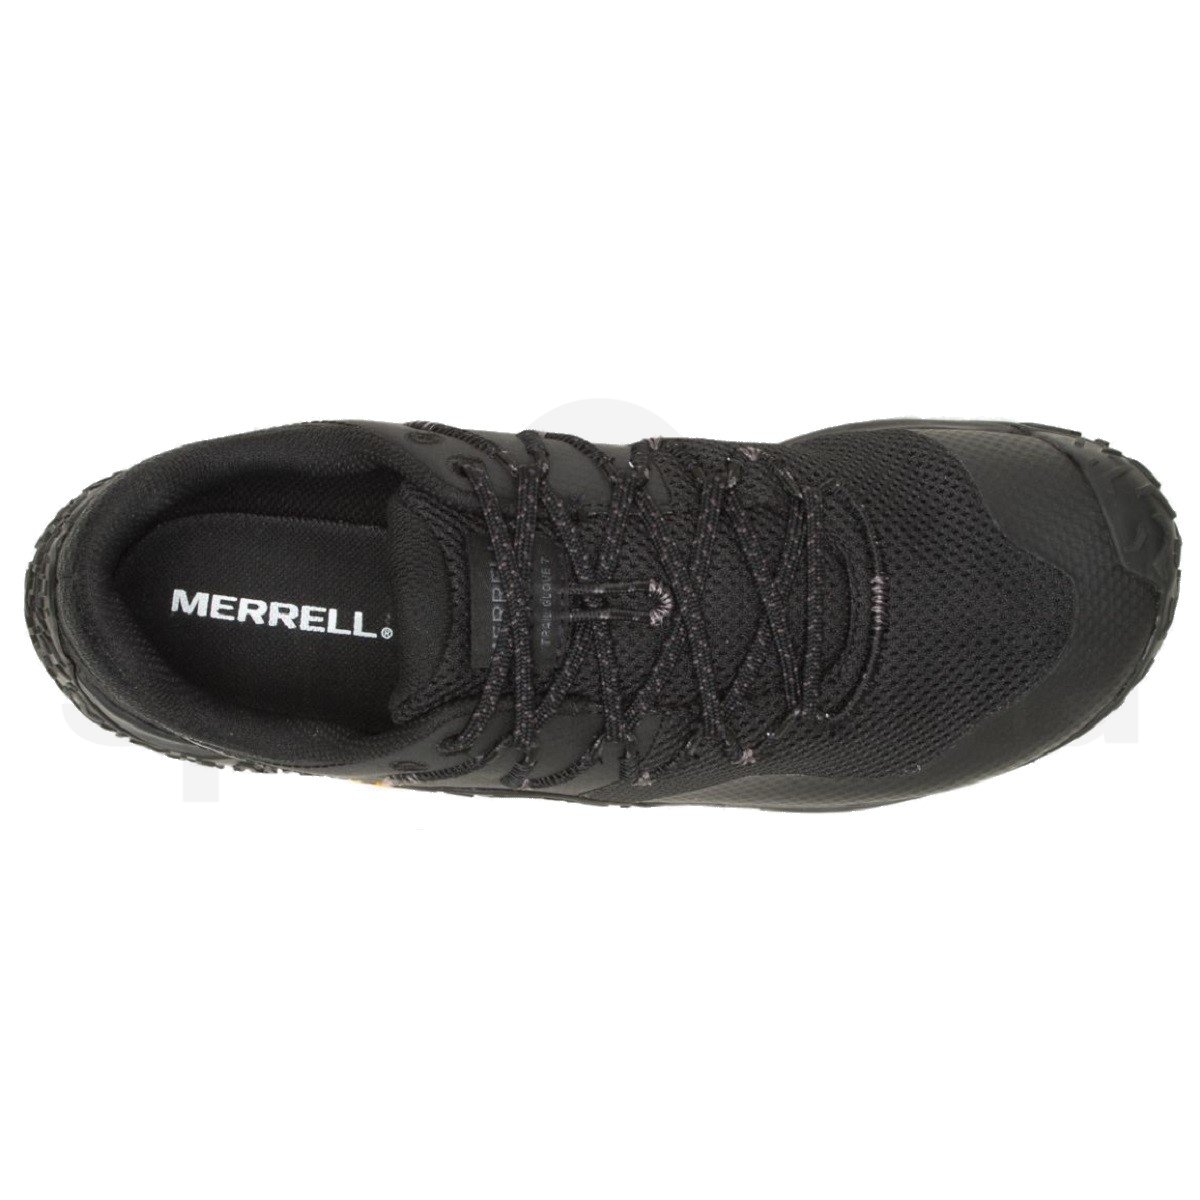 Obuv Merrell Trail Glove 7 M - černá